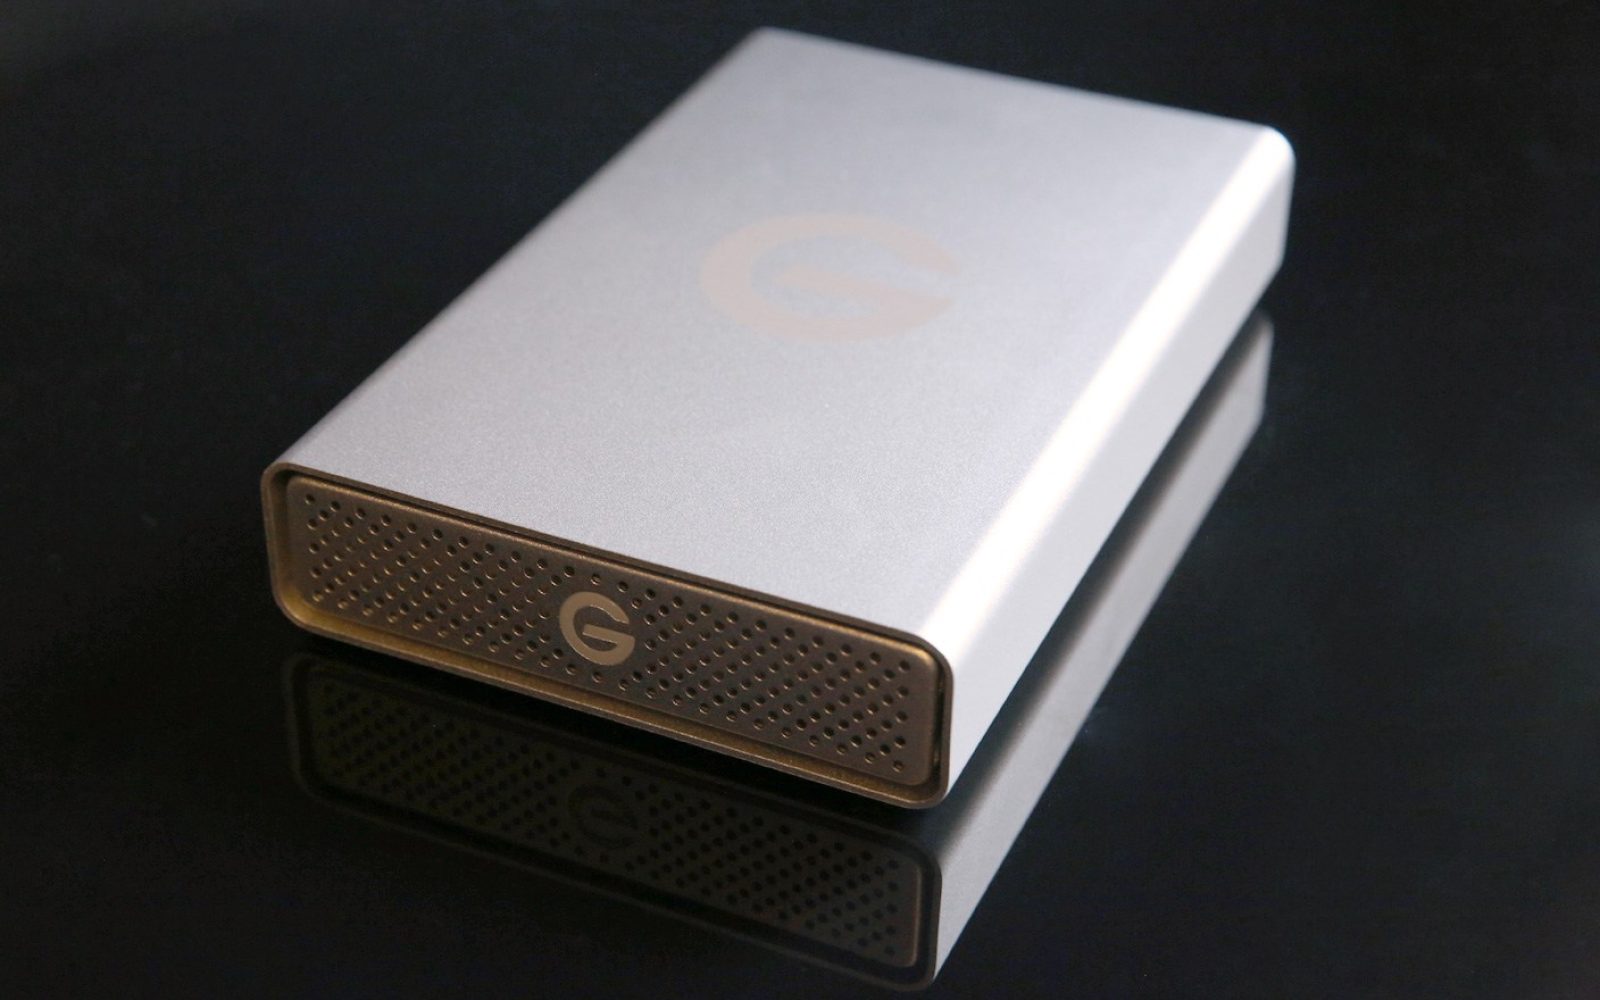 Best Portable External Hard Drive For Mac 2013